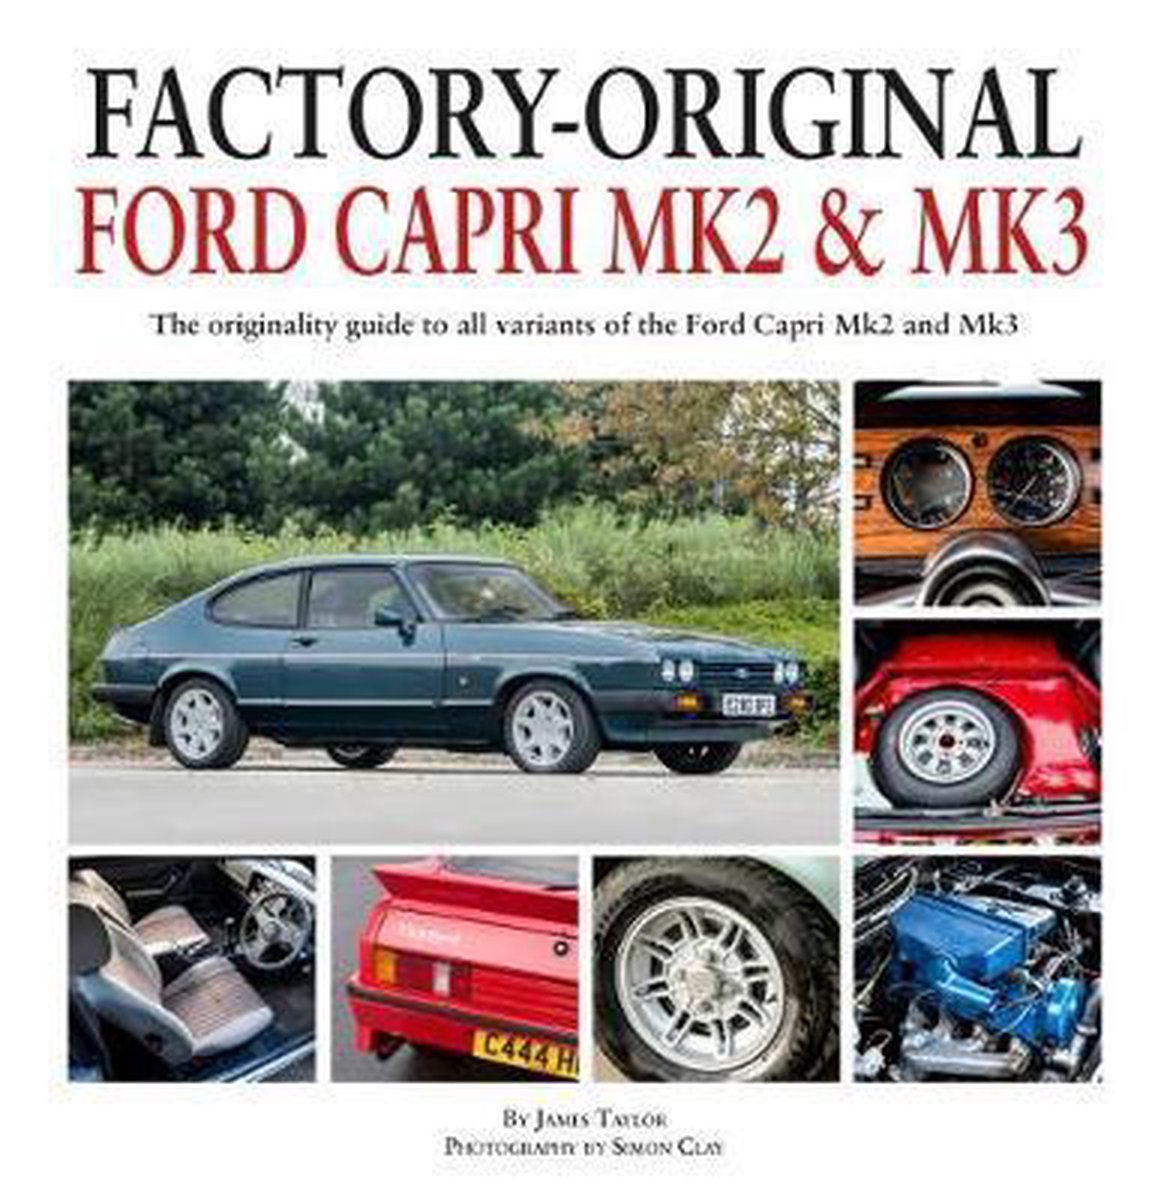 Factory-Original Ford Capri Mk II & Mk III: The Originality Guide to All Capri Models 1974 to 1987 - James Taylor